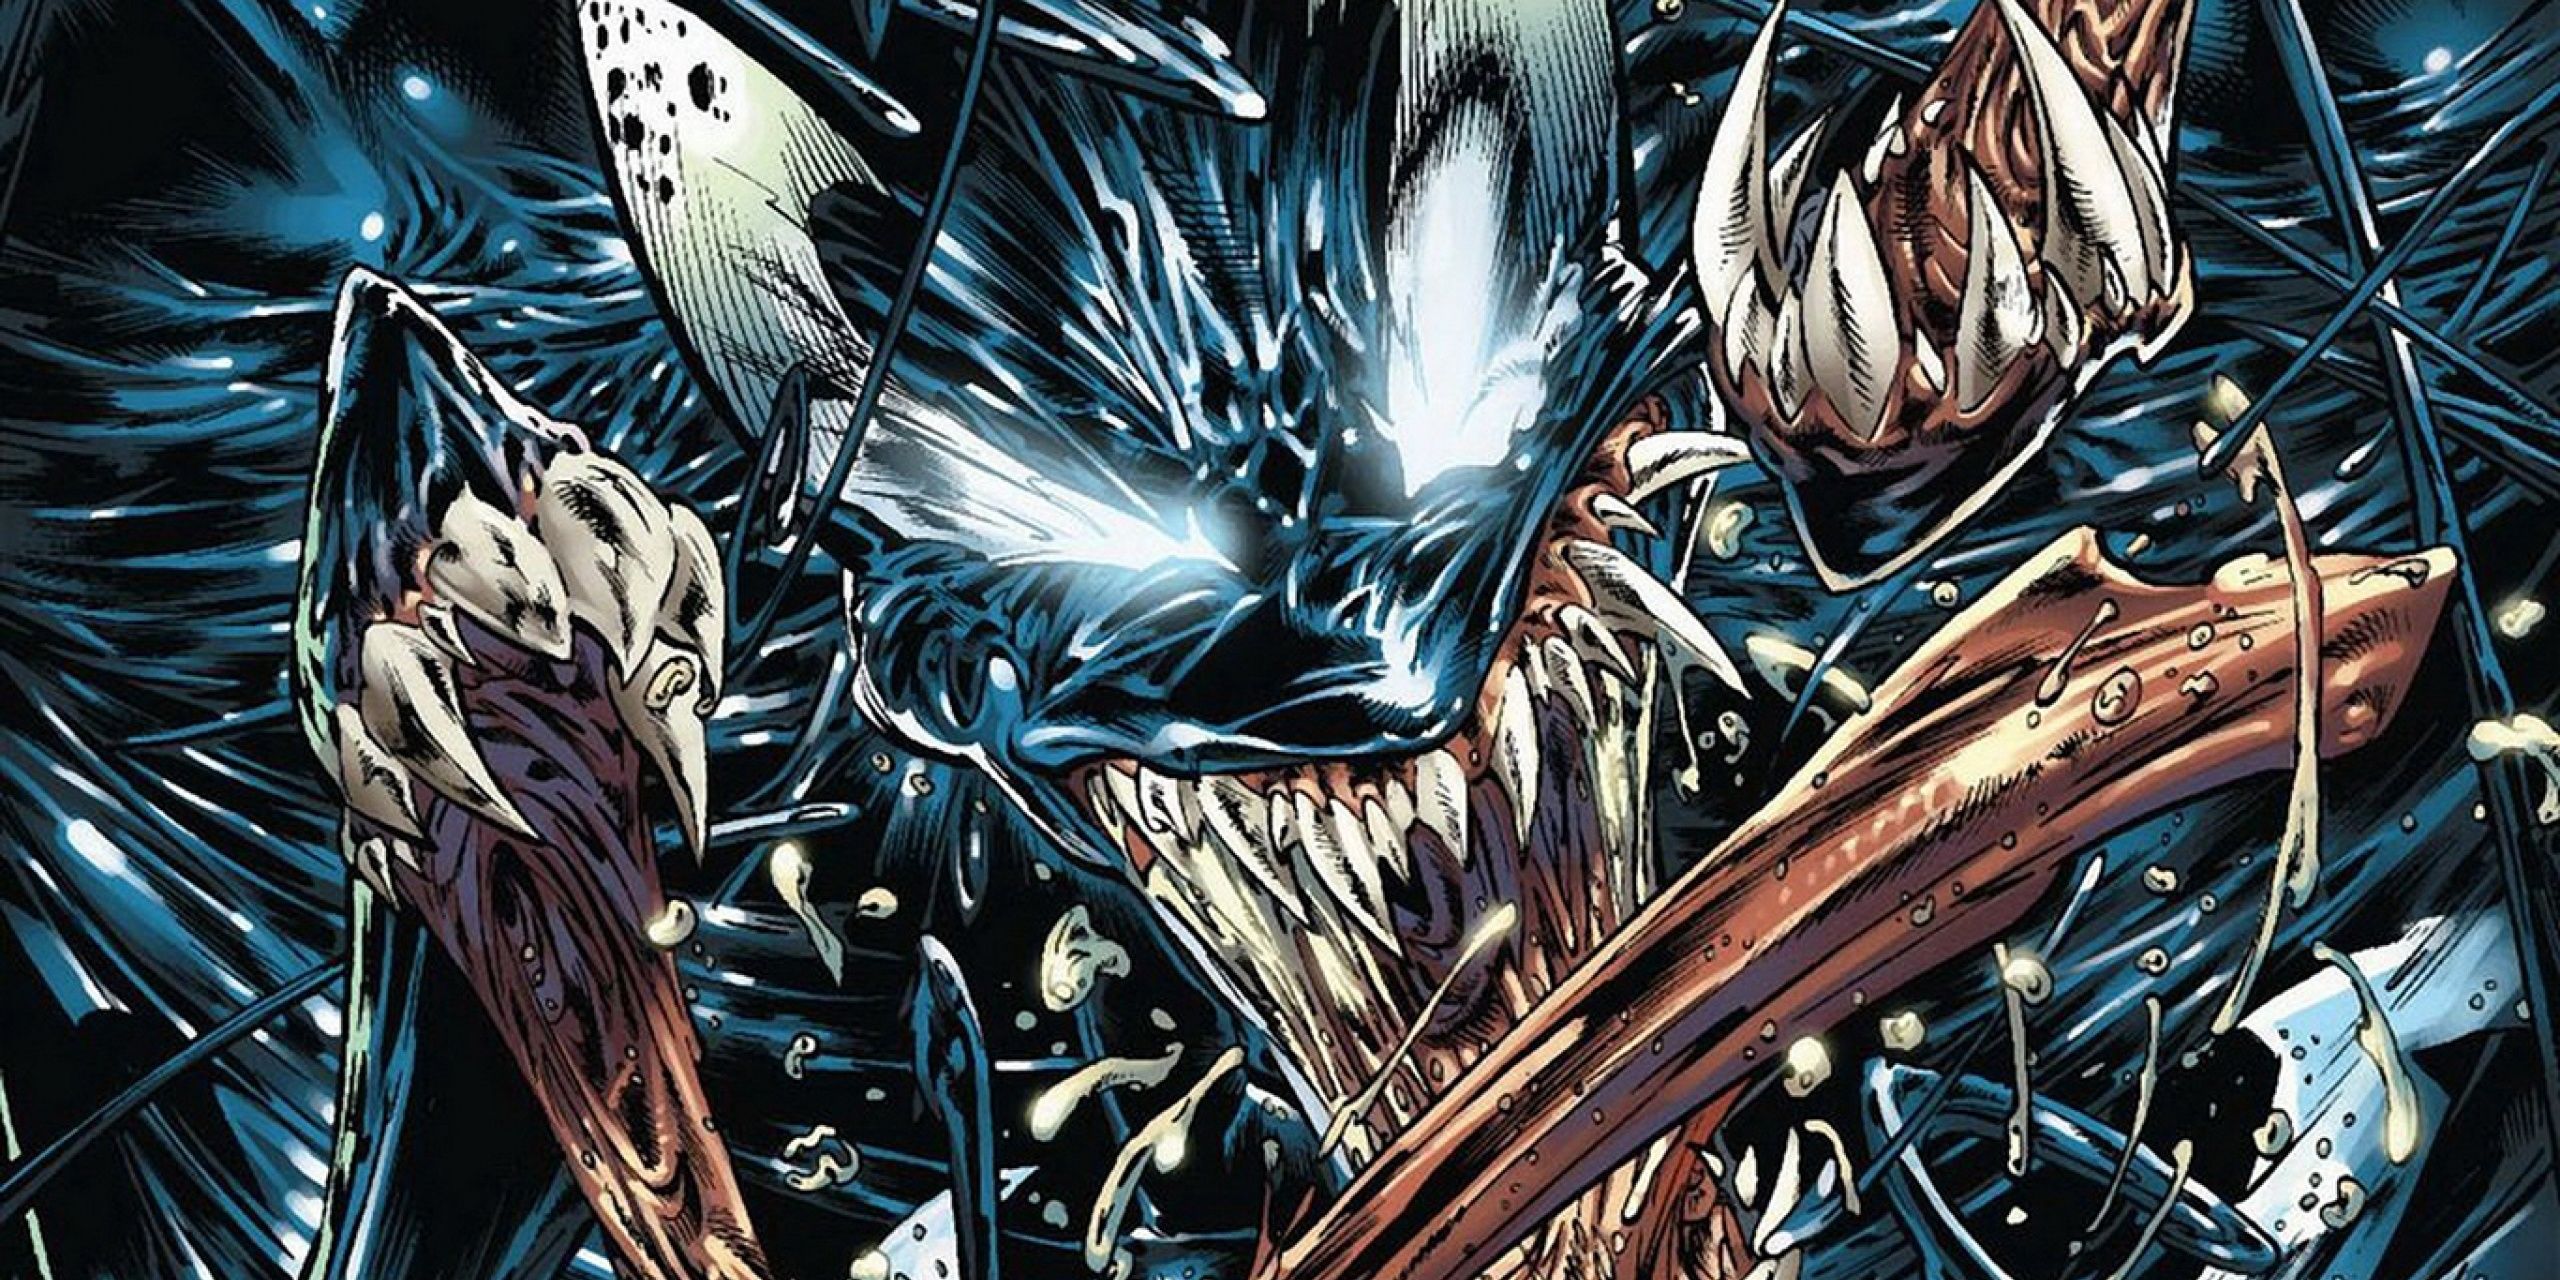 10 Best SpiderMan Vs Venom Fights Ranked